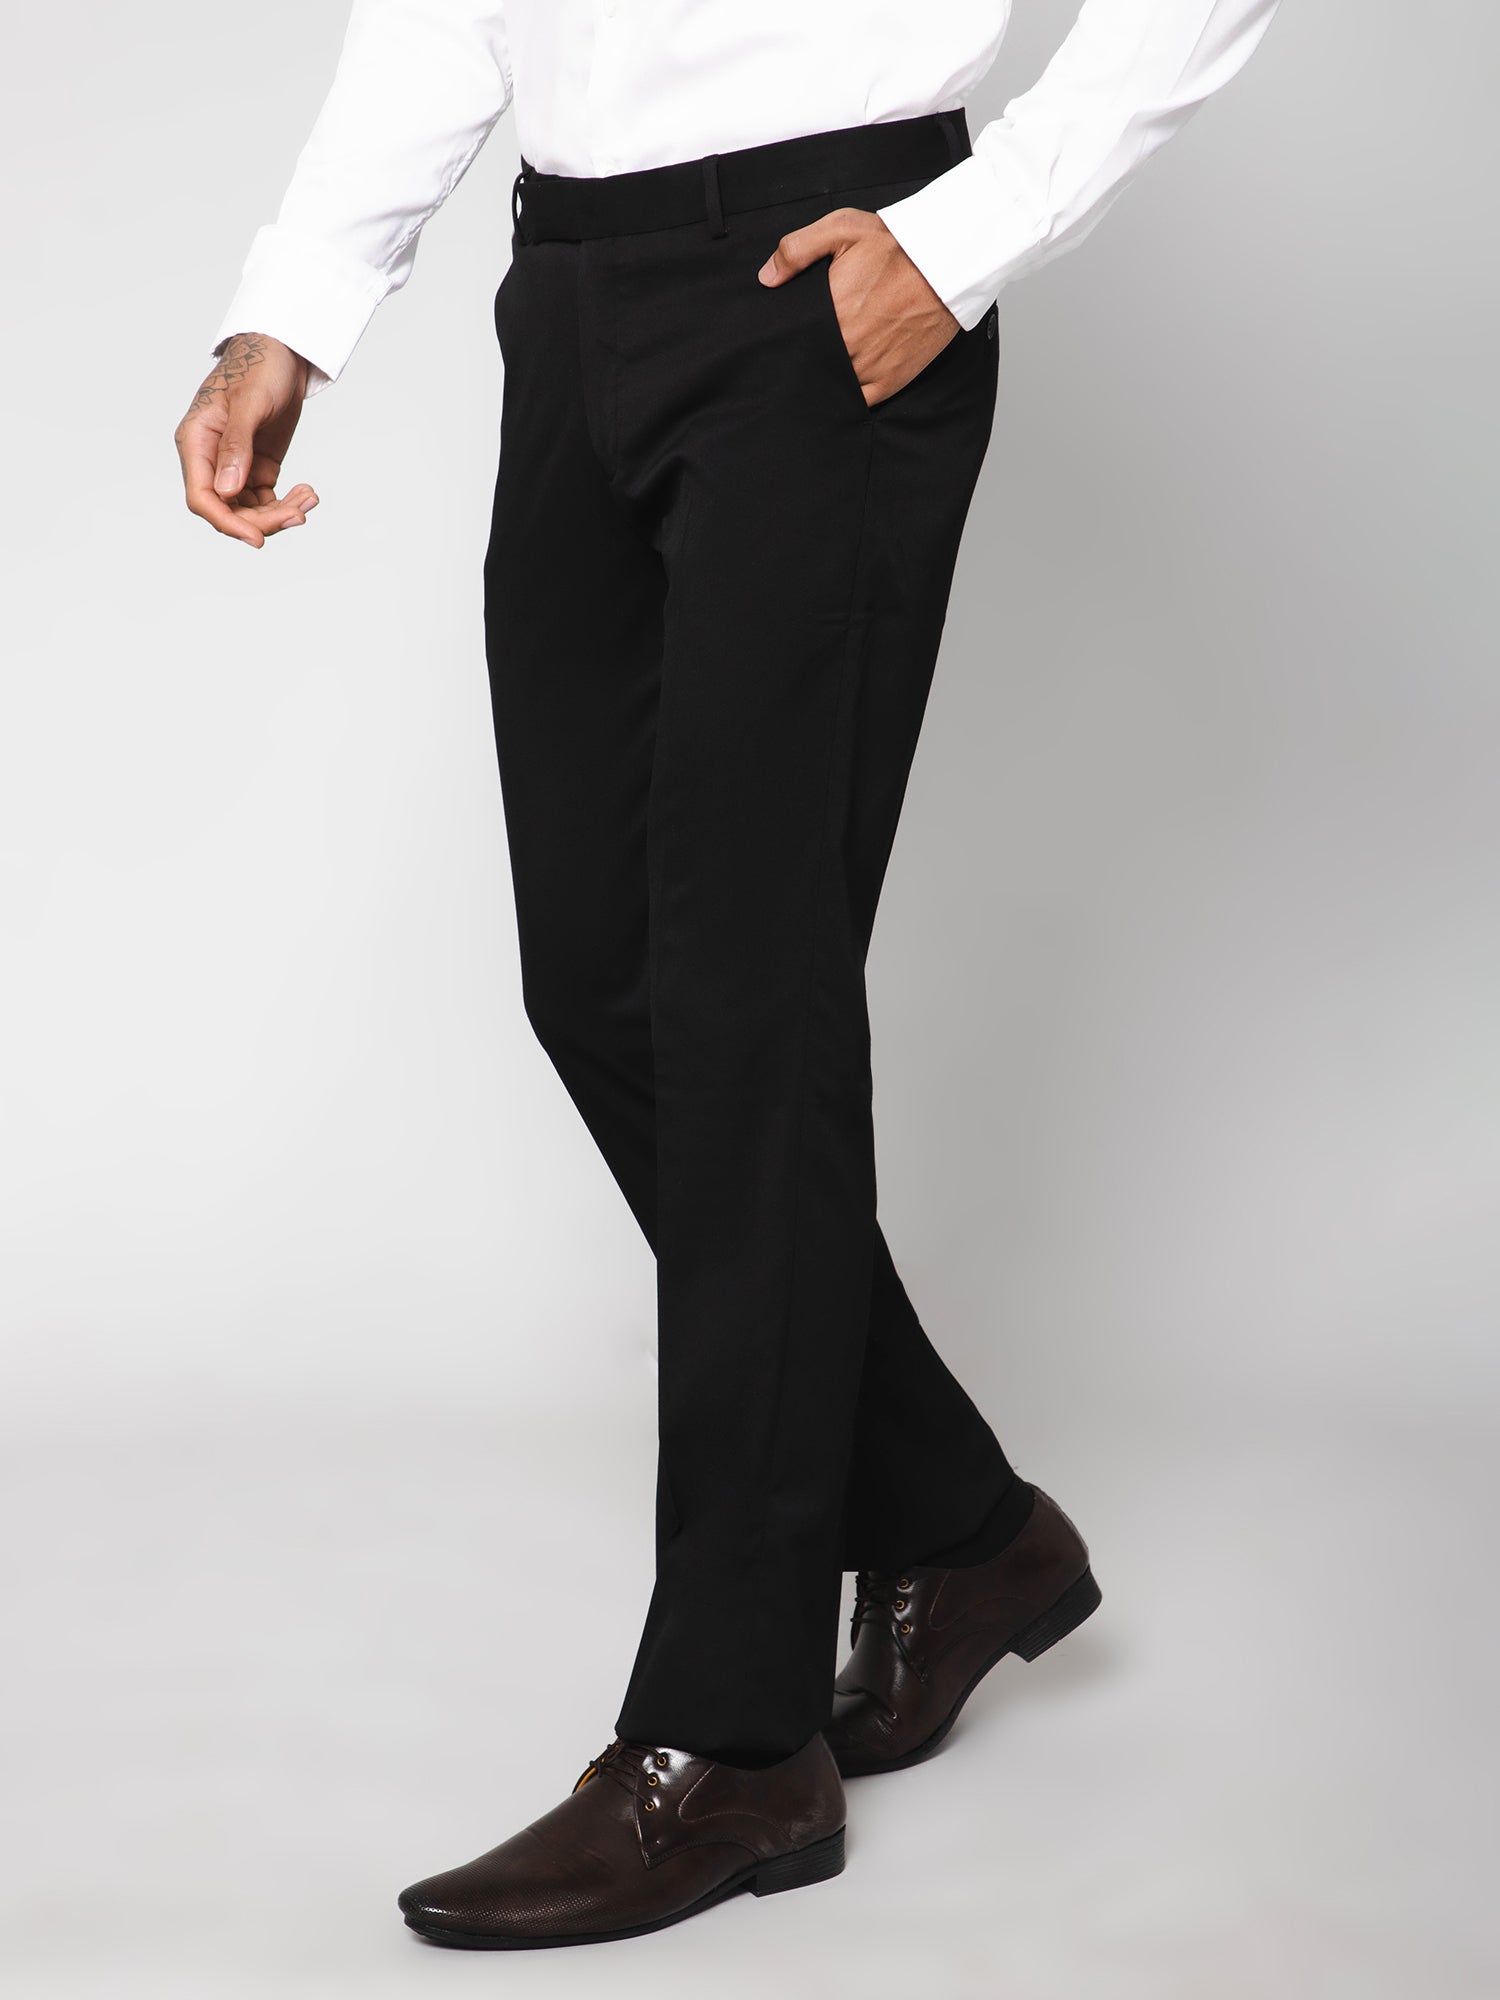 Buy Jet Black Trouser | Casual Black Solid Trousers for Men Online | Andamen